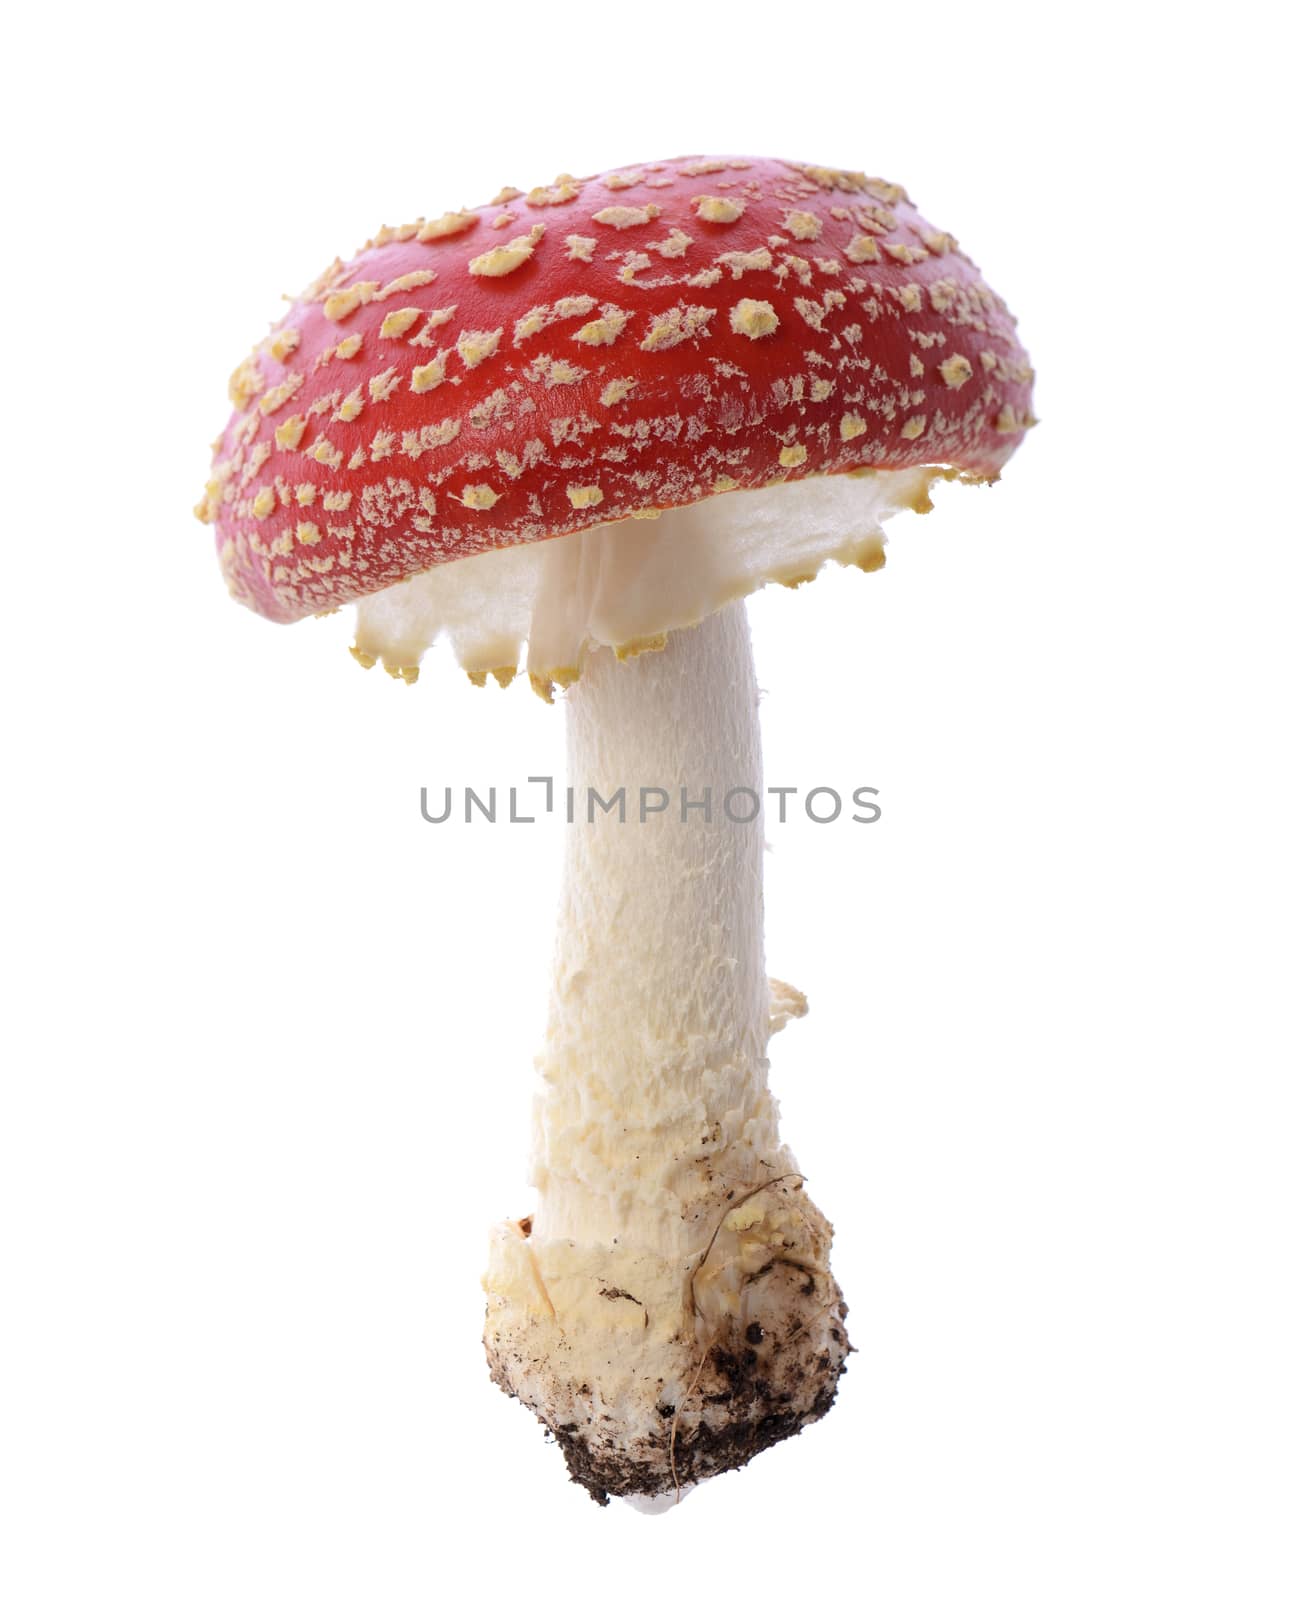 Red mushroom by hyrons